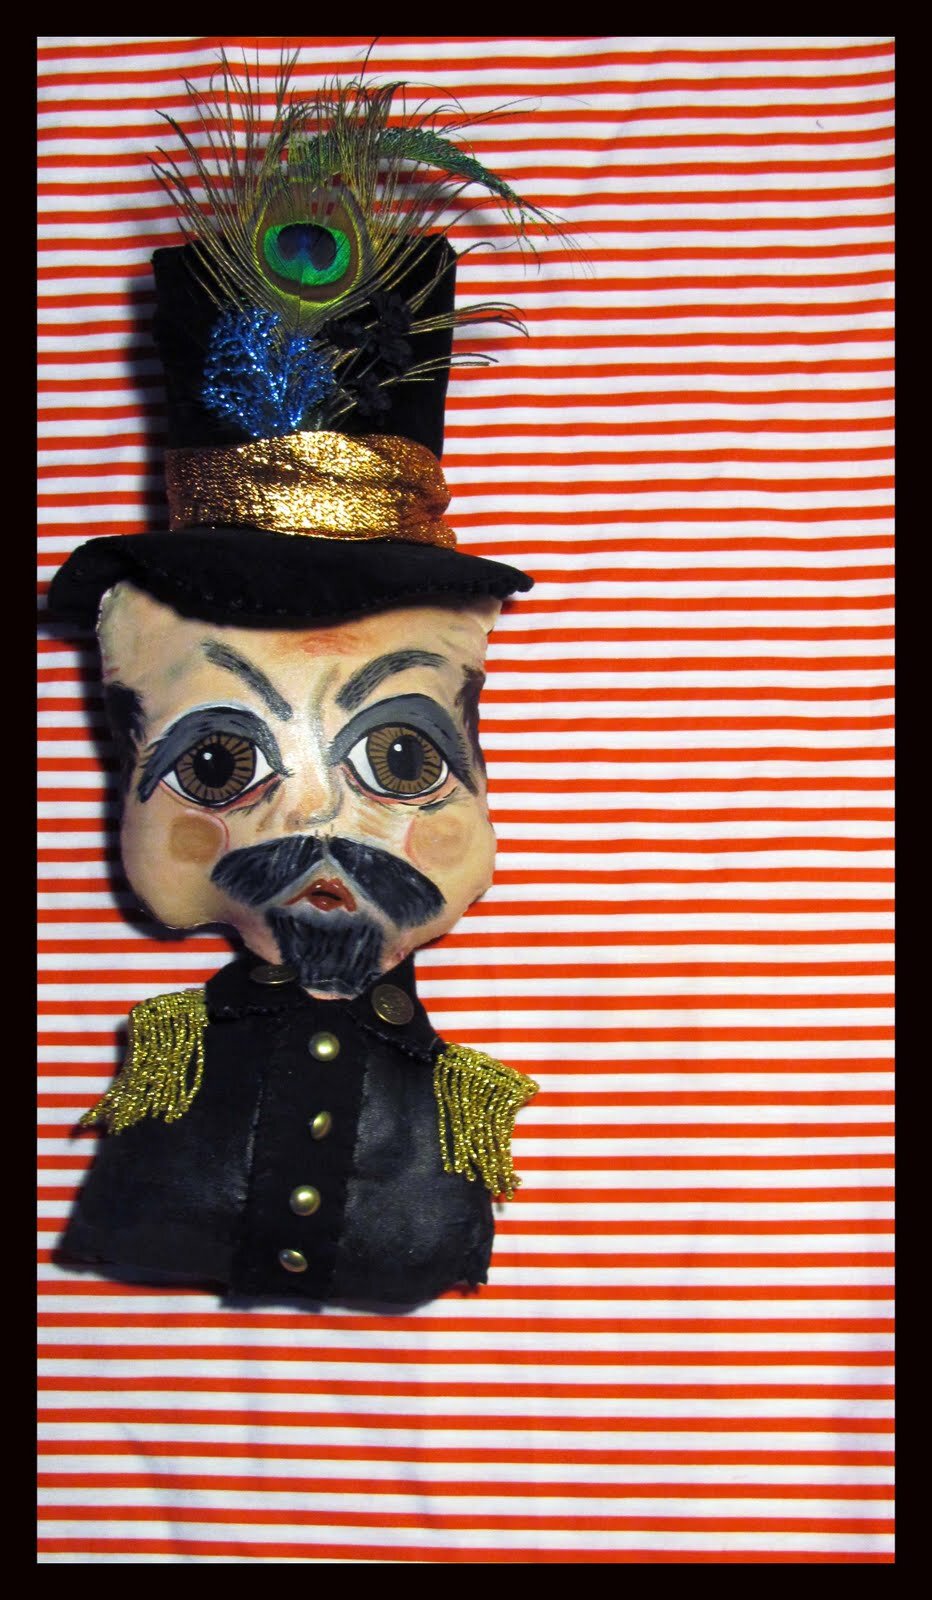   Emperor Norton doll, 2011, by Kook Teflon (b. 1973).  Hand-stitched cotton textile, vintage fabrics, acrylic paint. 15”h x 8”w. Part of the artist’s installation,  A Century of Barbary Eccentrics , at 1035 Guerrero Street, San Francisco, 26 Februar